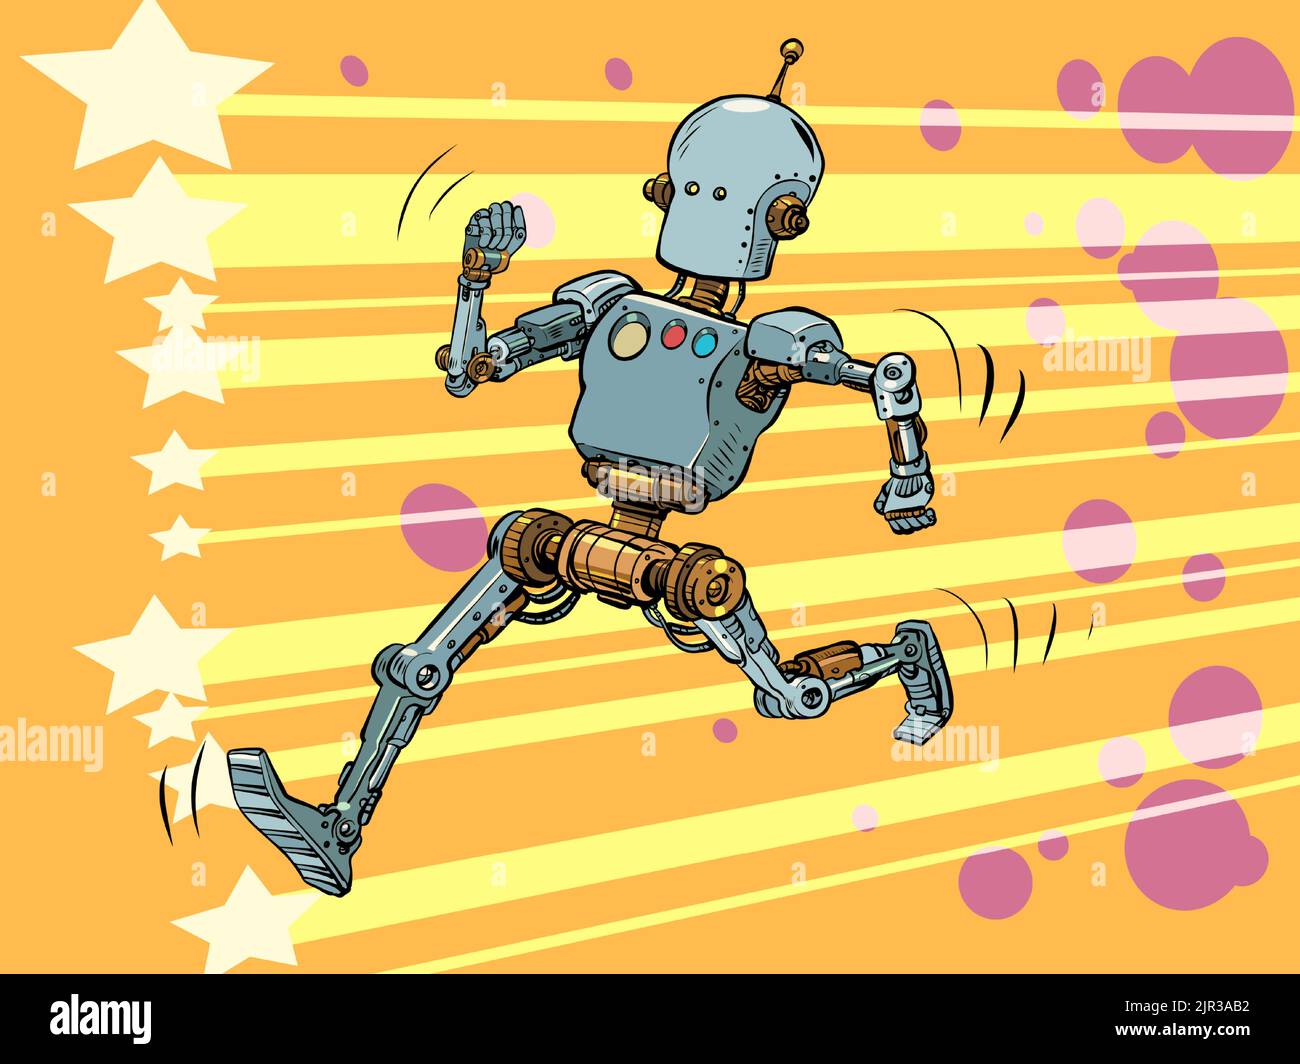 The robot runs along the red carpet. Leader Hero Pop art retro vector illustration 50s 60s style kitsch vintage Stock Vector